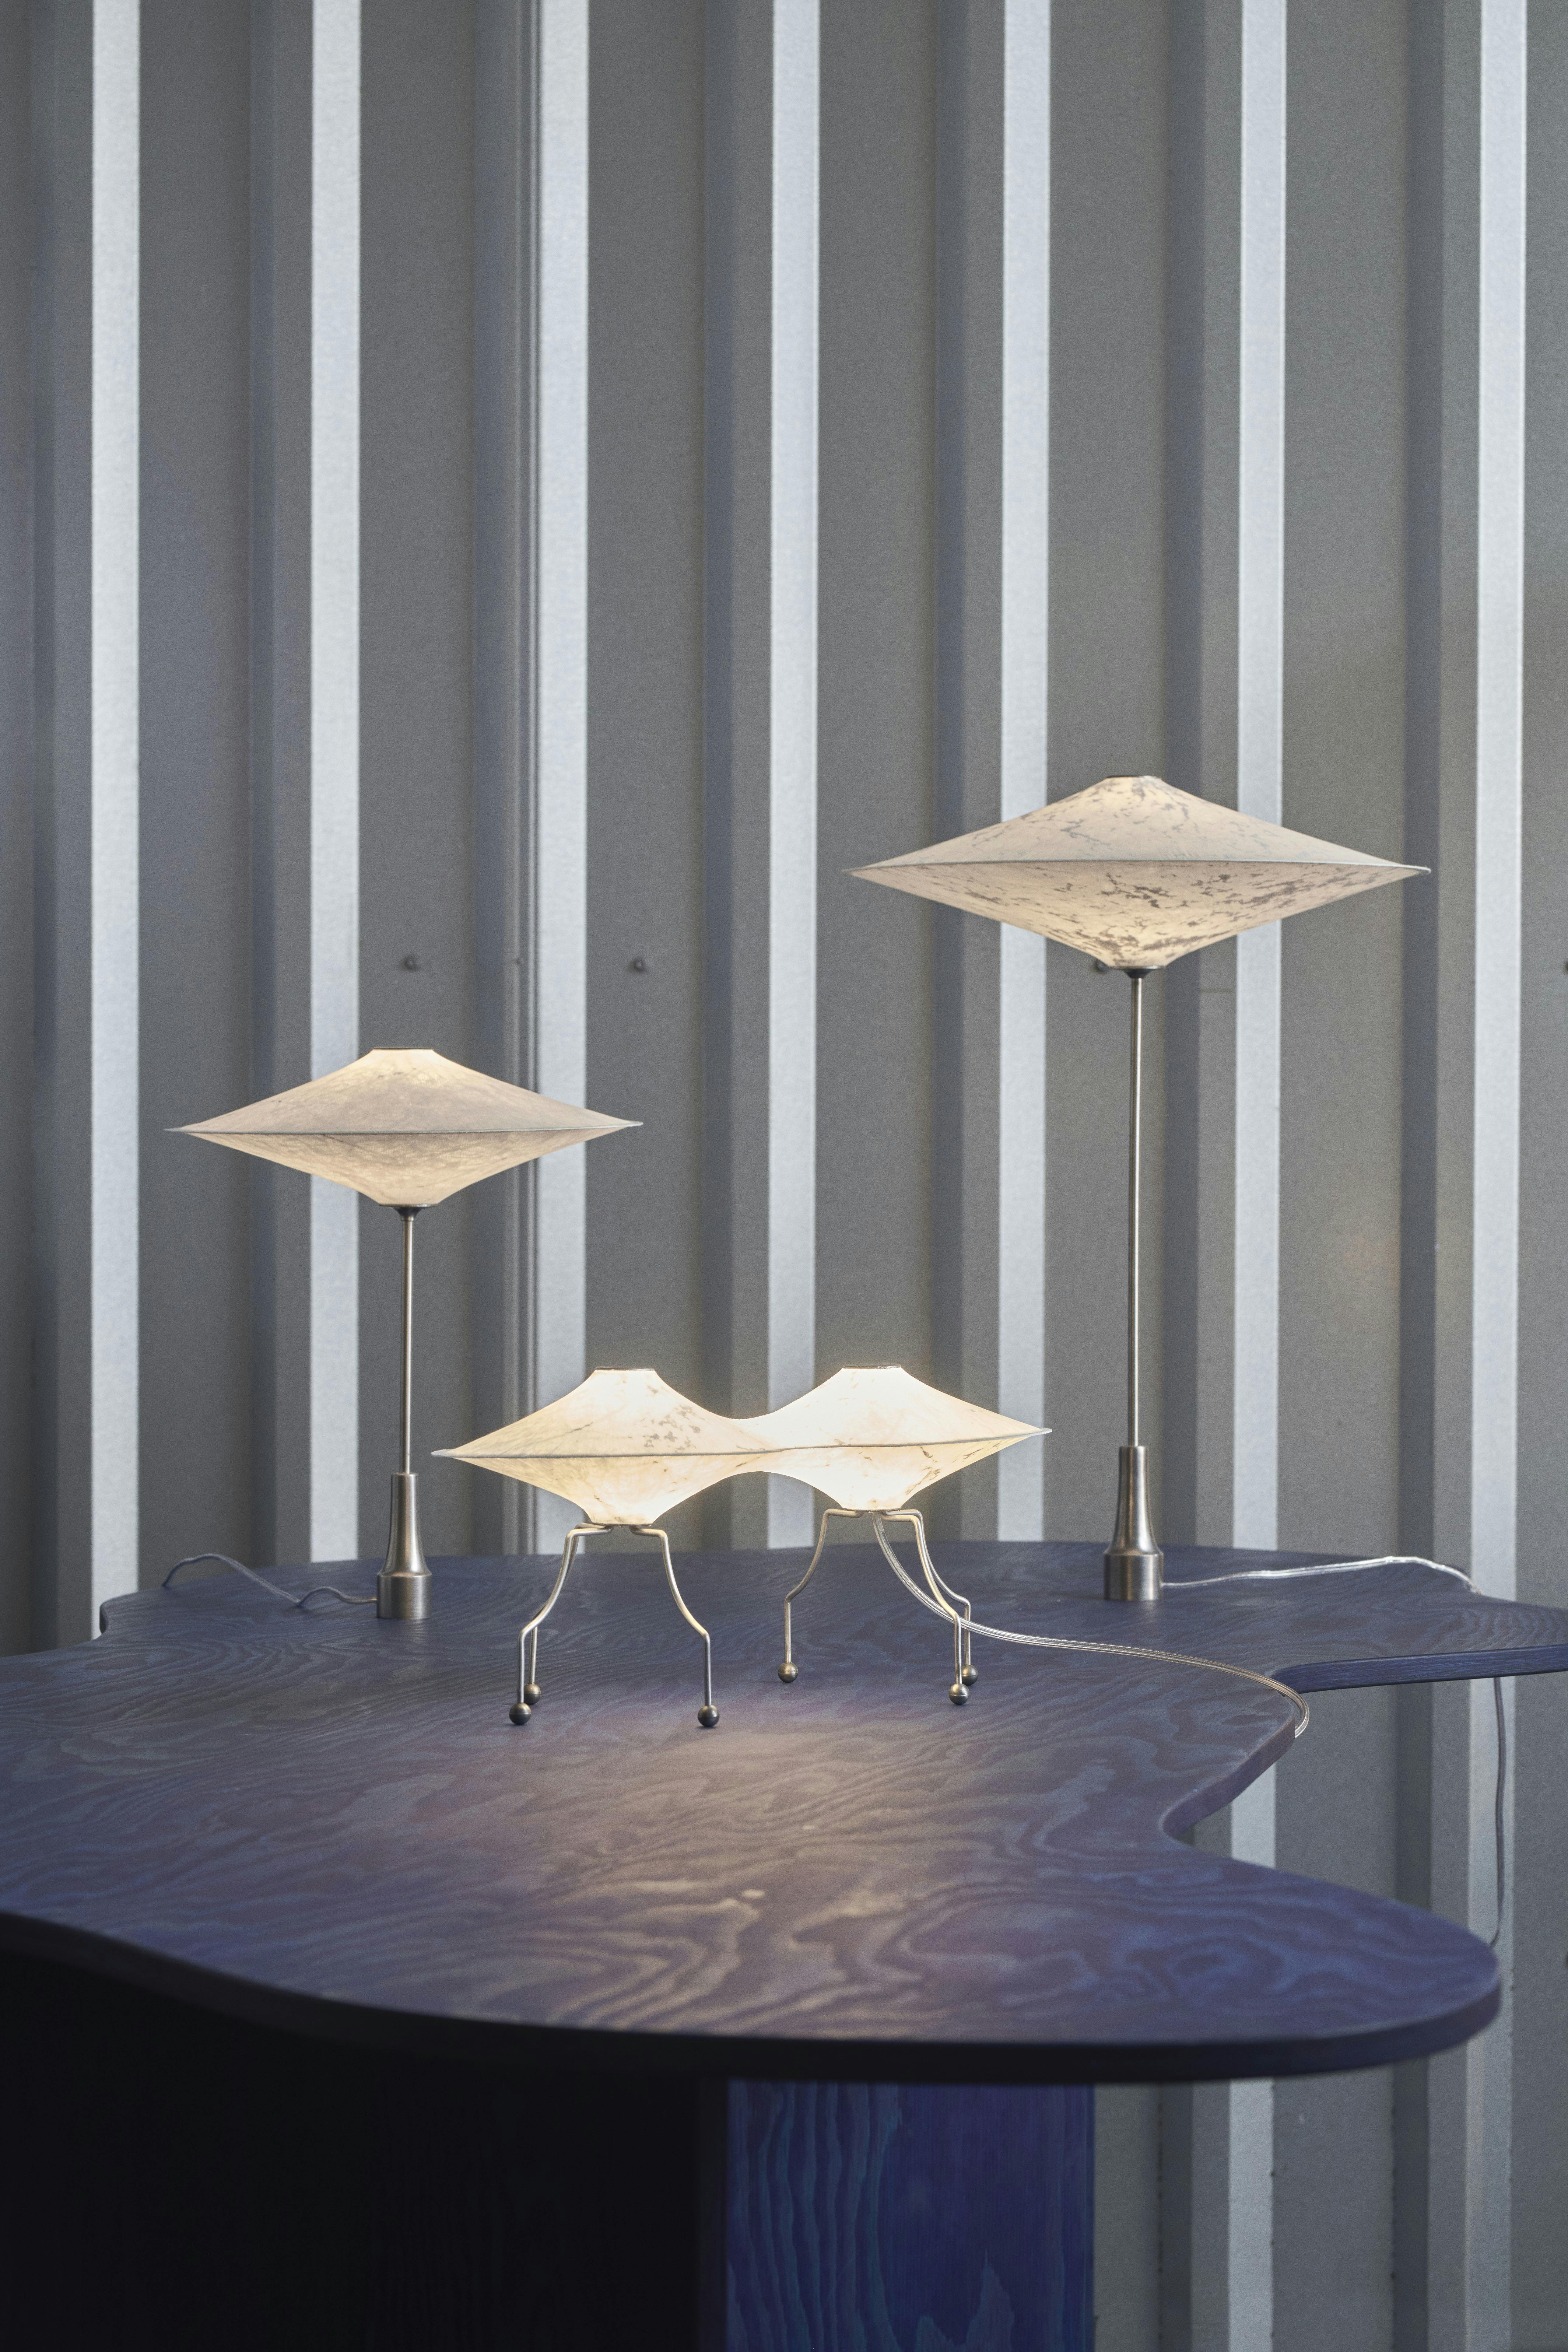 Membrane Lamp Study by Sigurd Nis